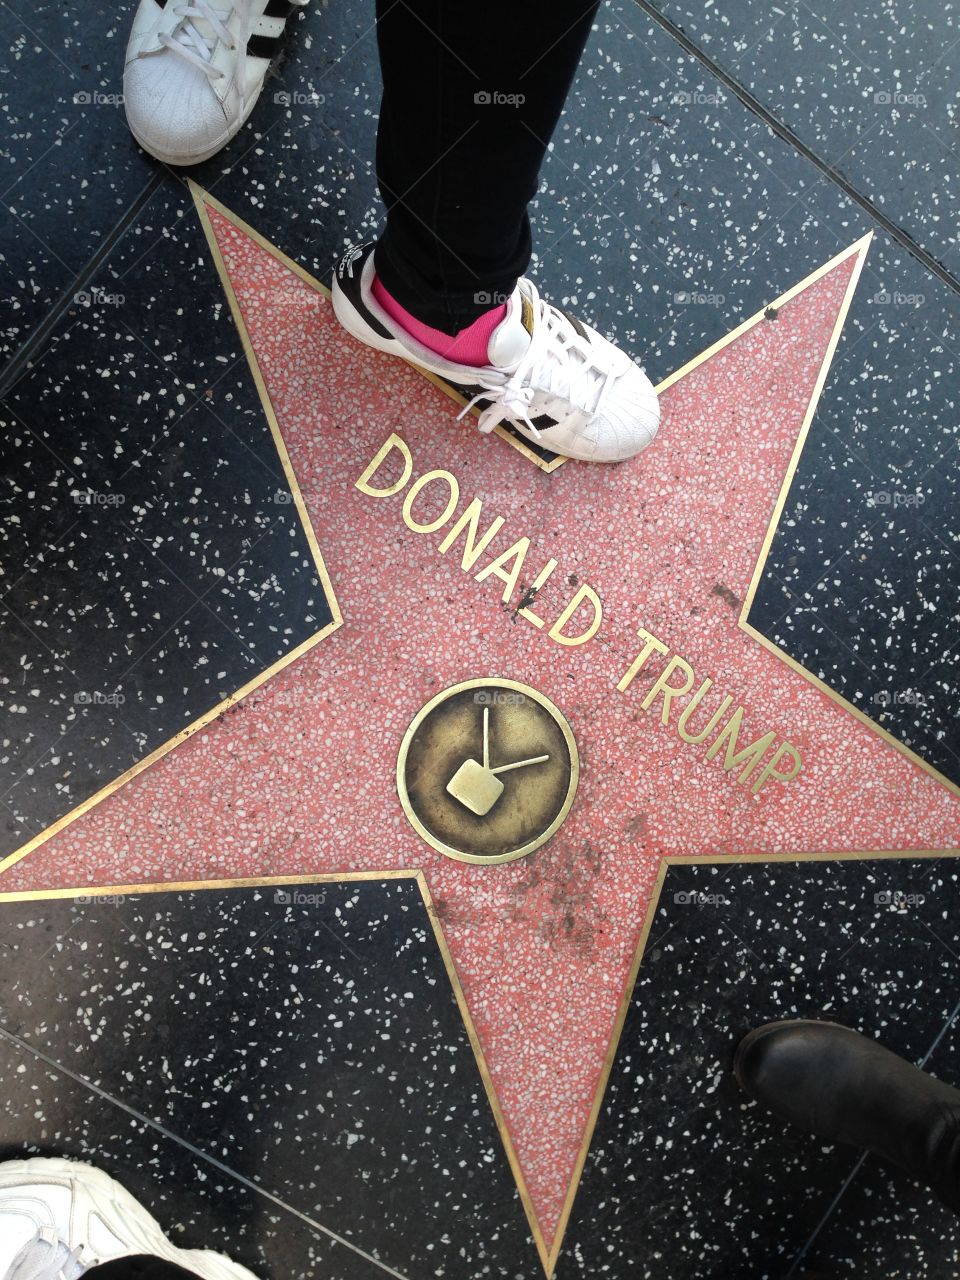 Donald Trump star floor walk of fame, Hollywood California Los Angeles